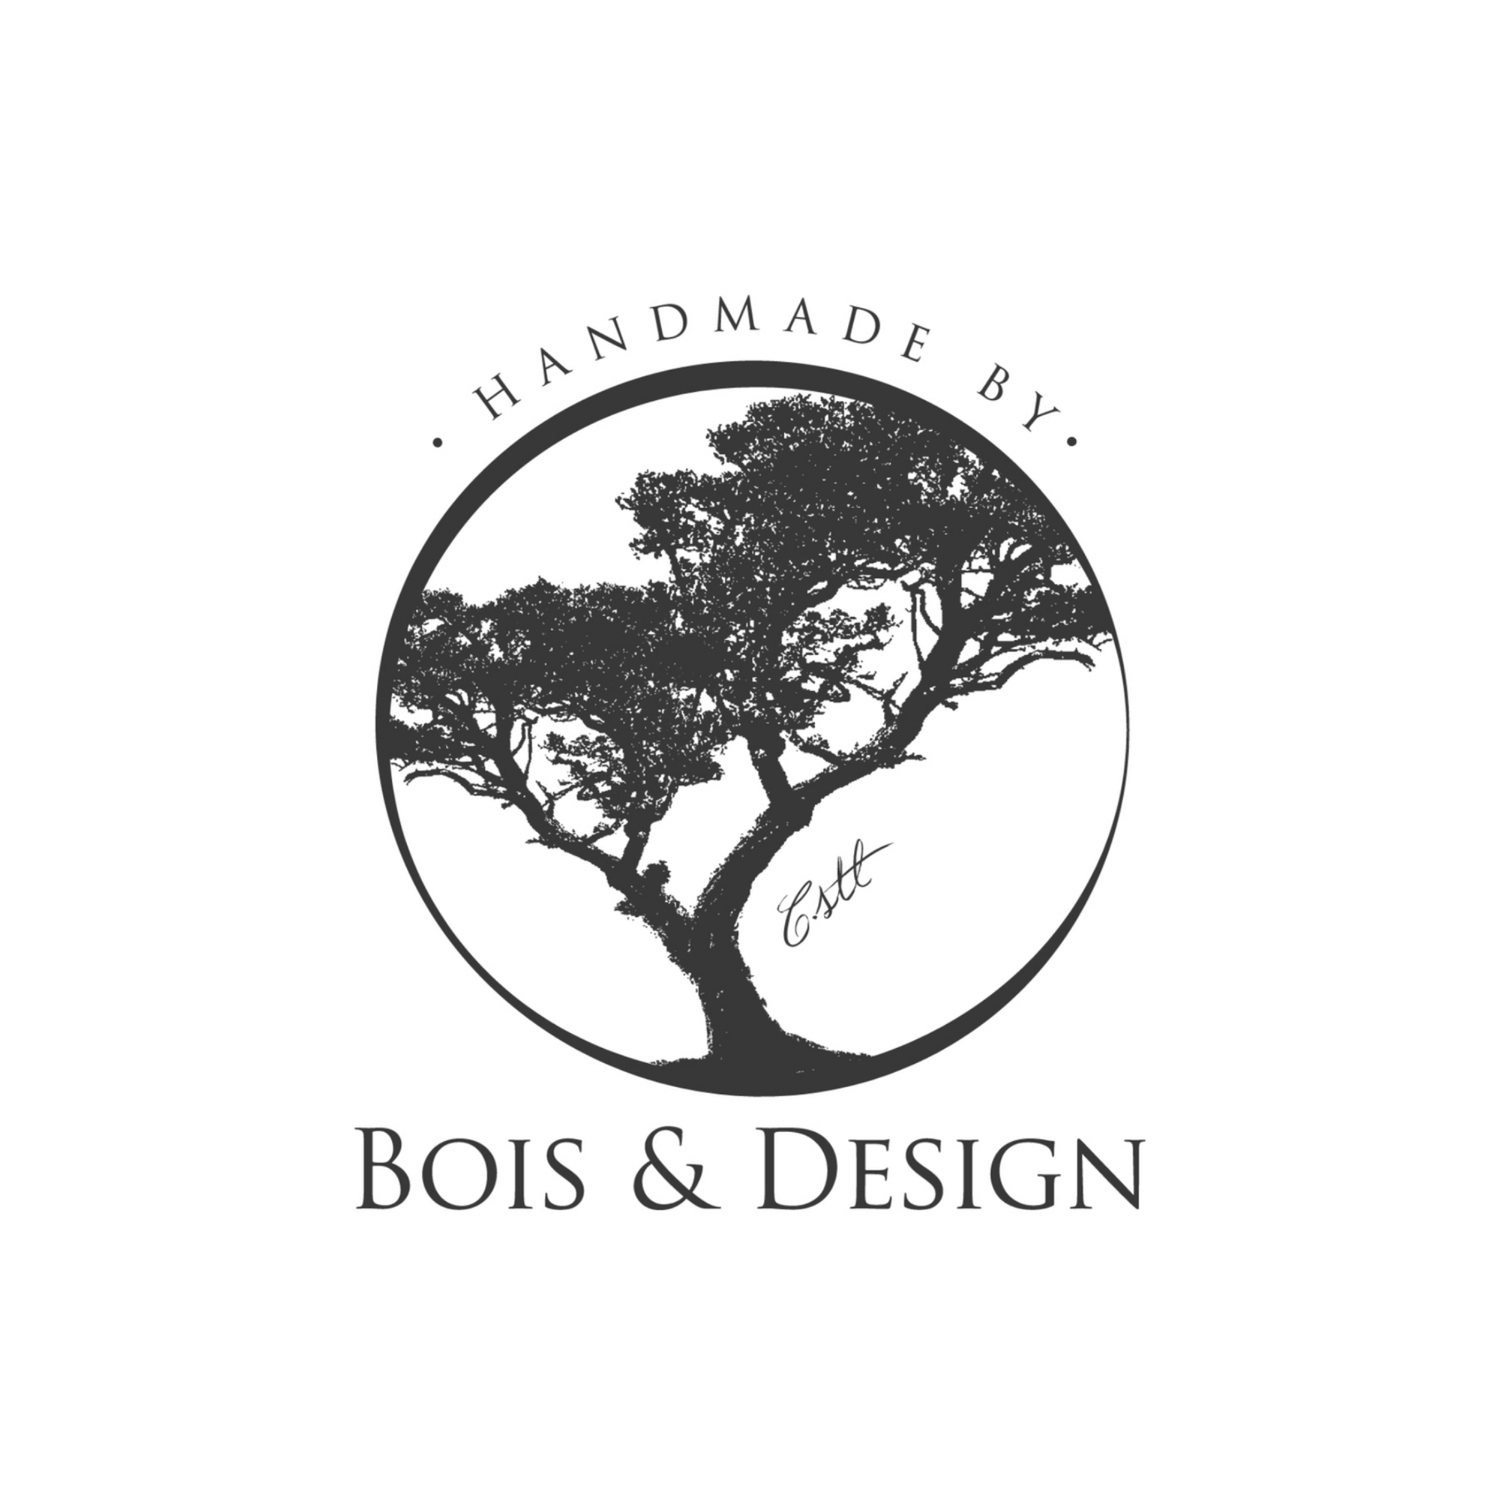 Bois & Design - custom made hardwood furniture